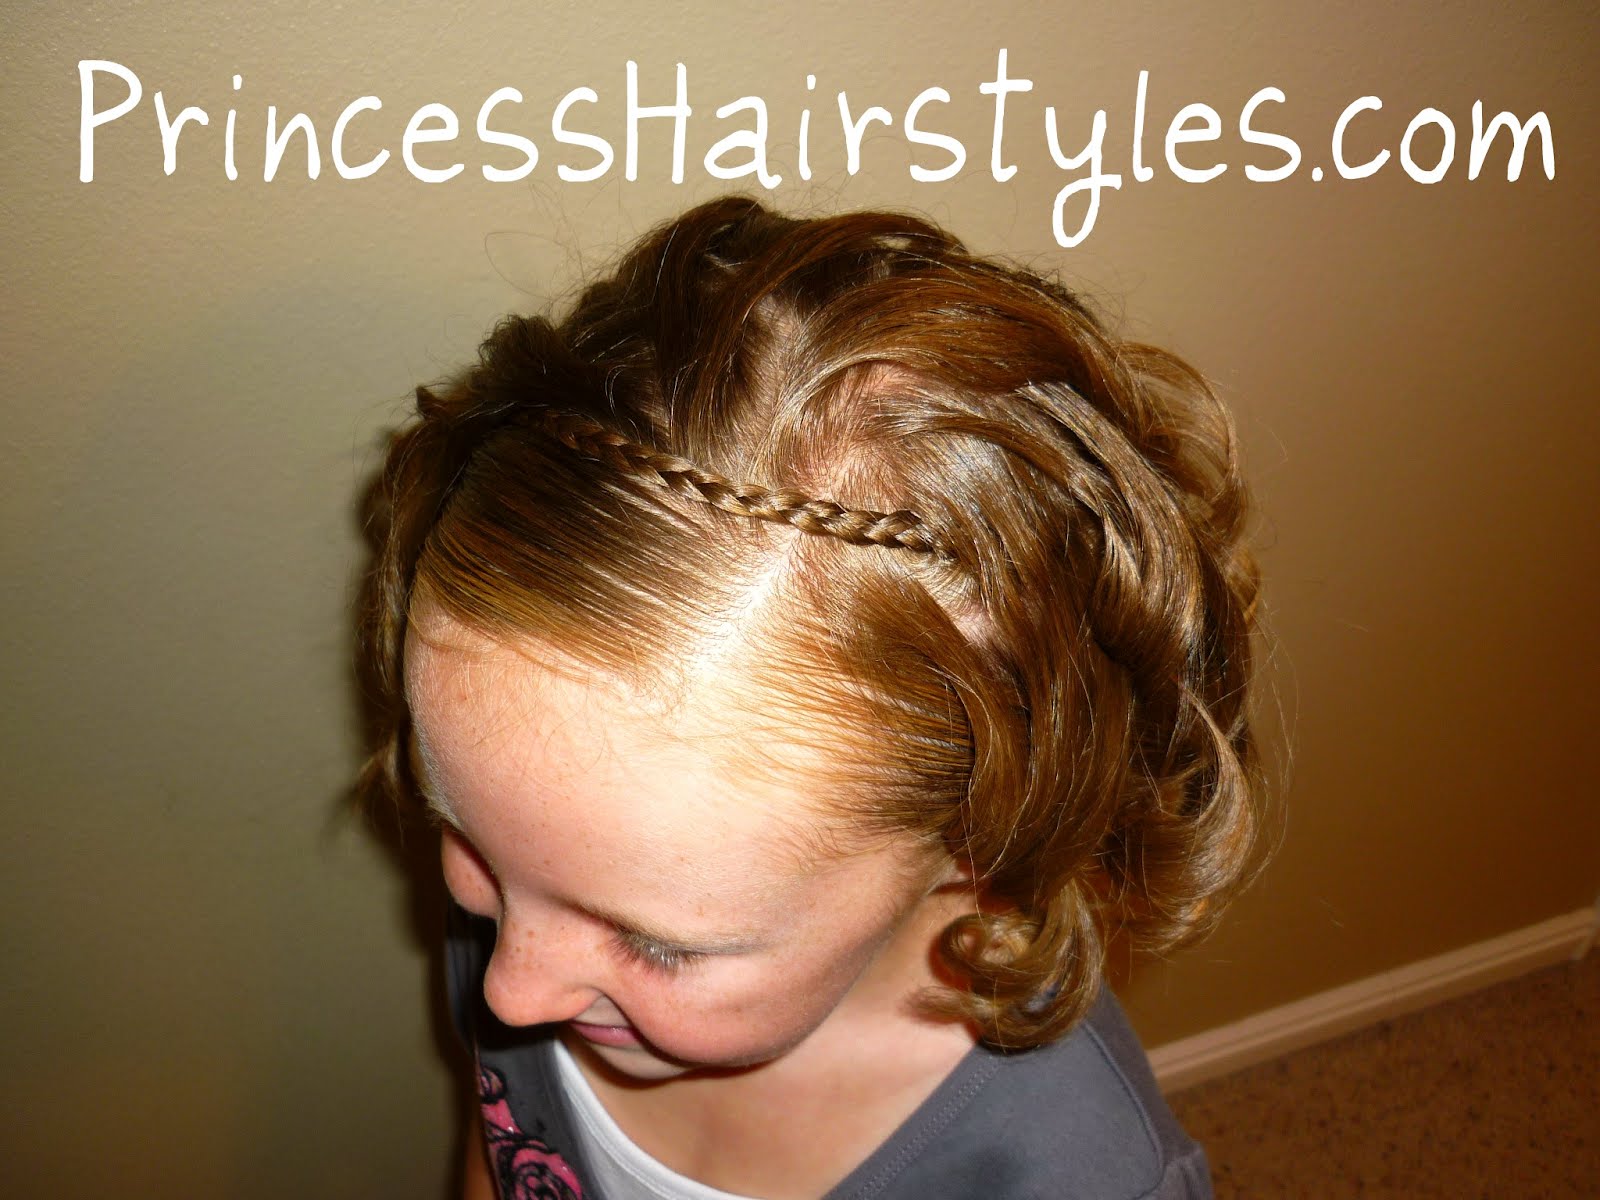 10 Fun Summer Hairstyles for Little Girls 